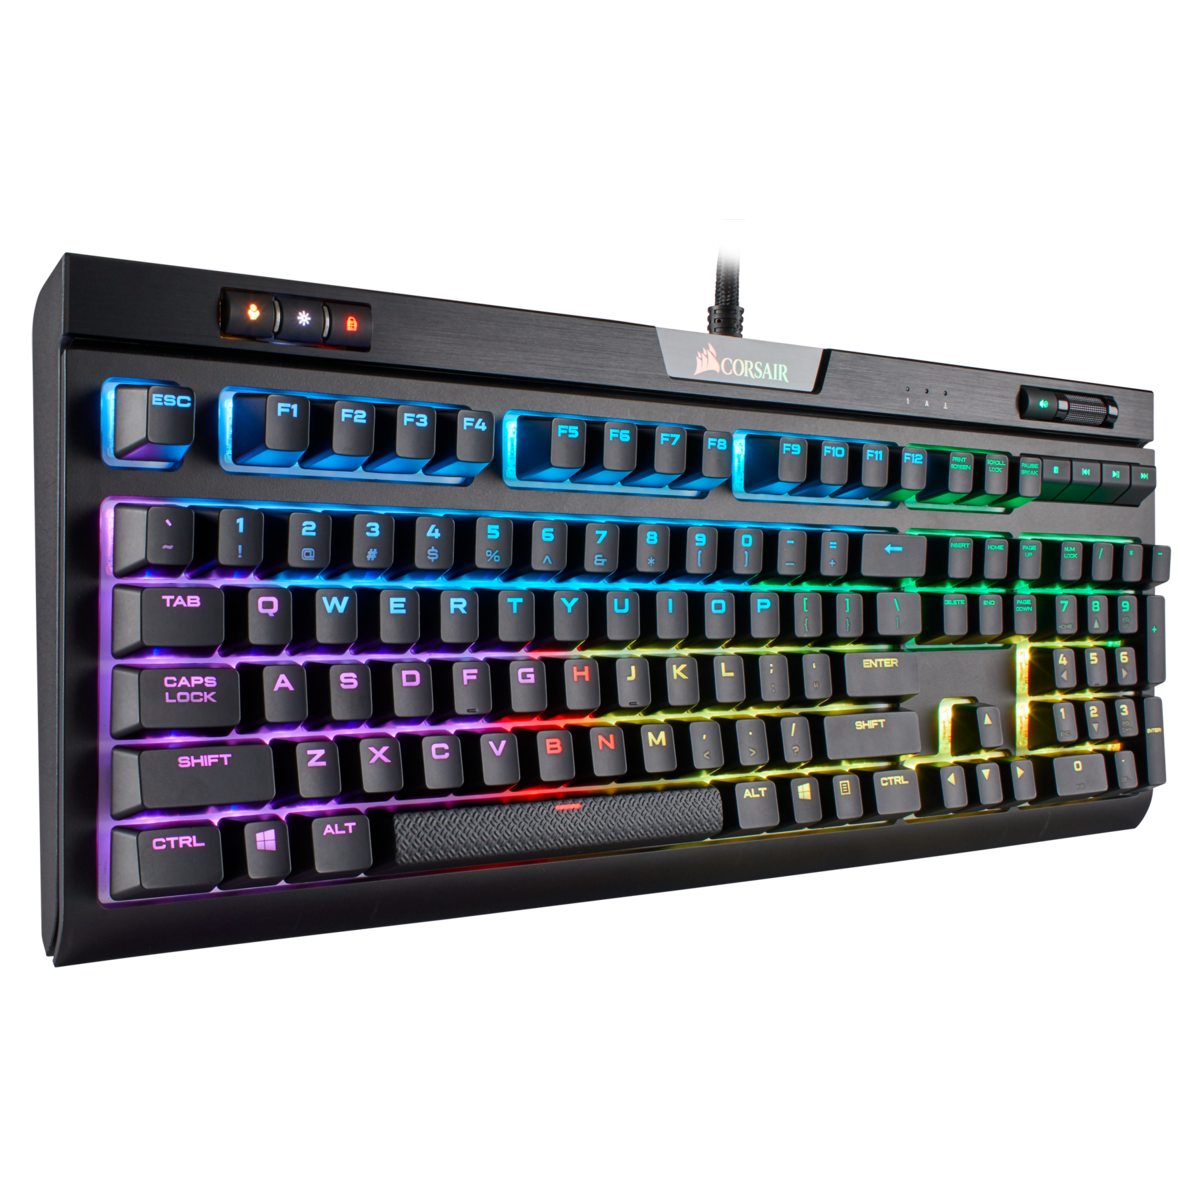 Corsair RGB MK.2 Mechanical Gaming Keyboard online Worldwide -